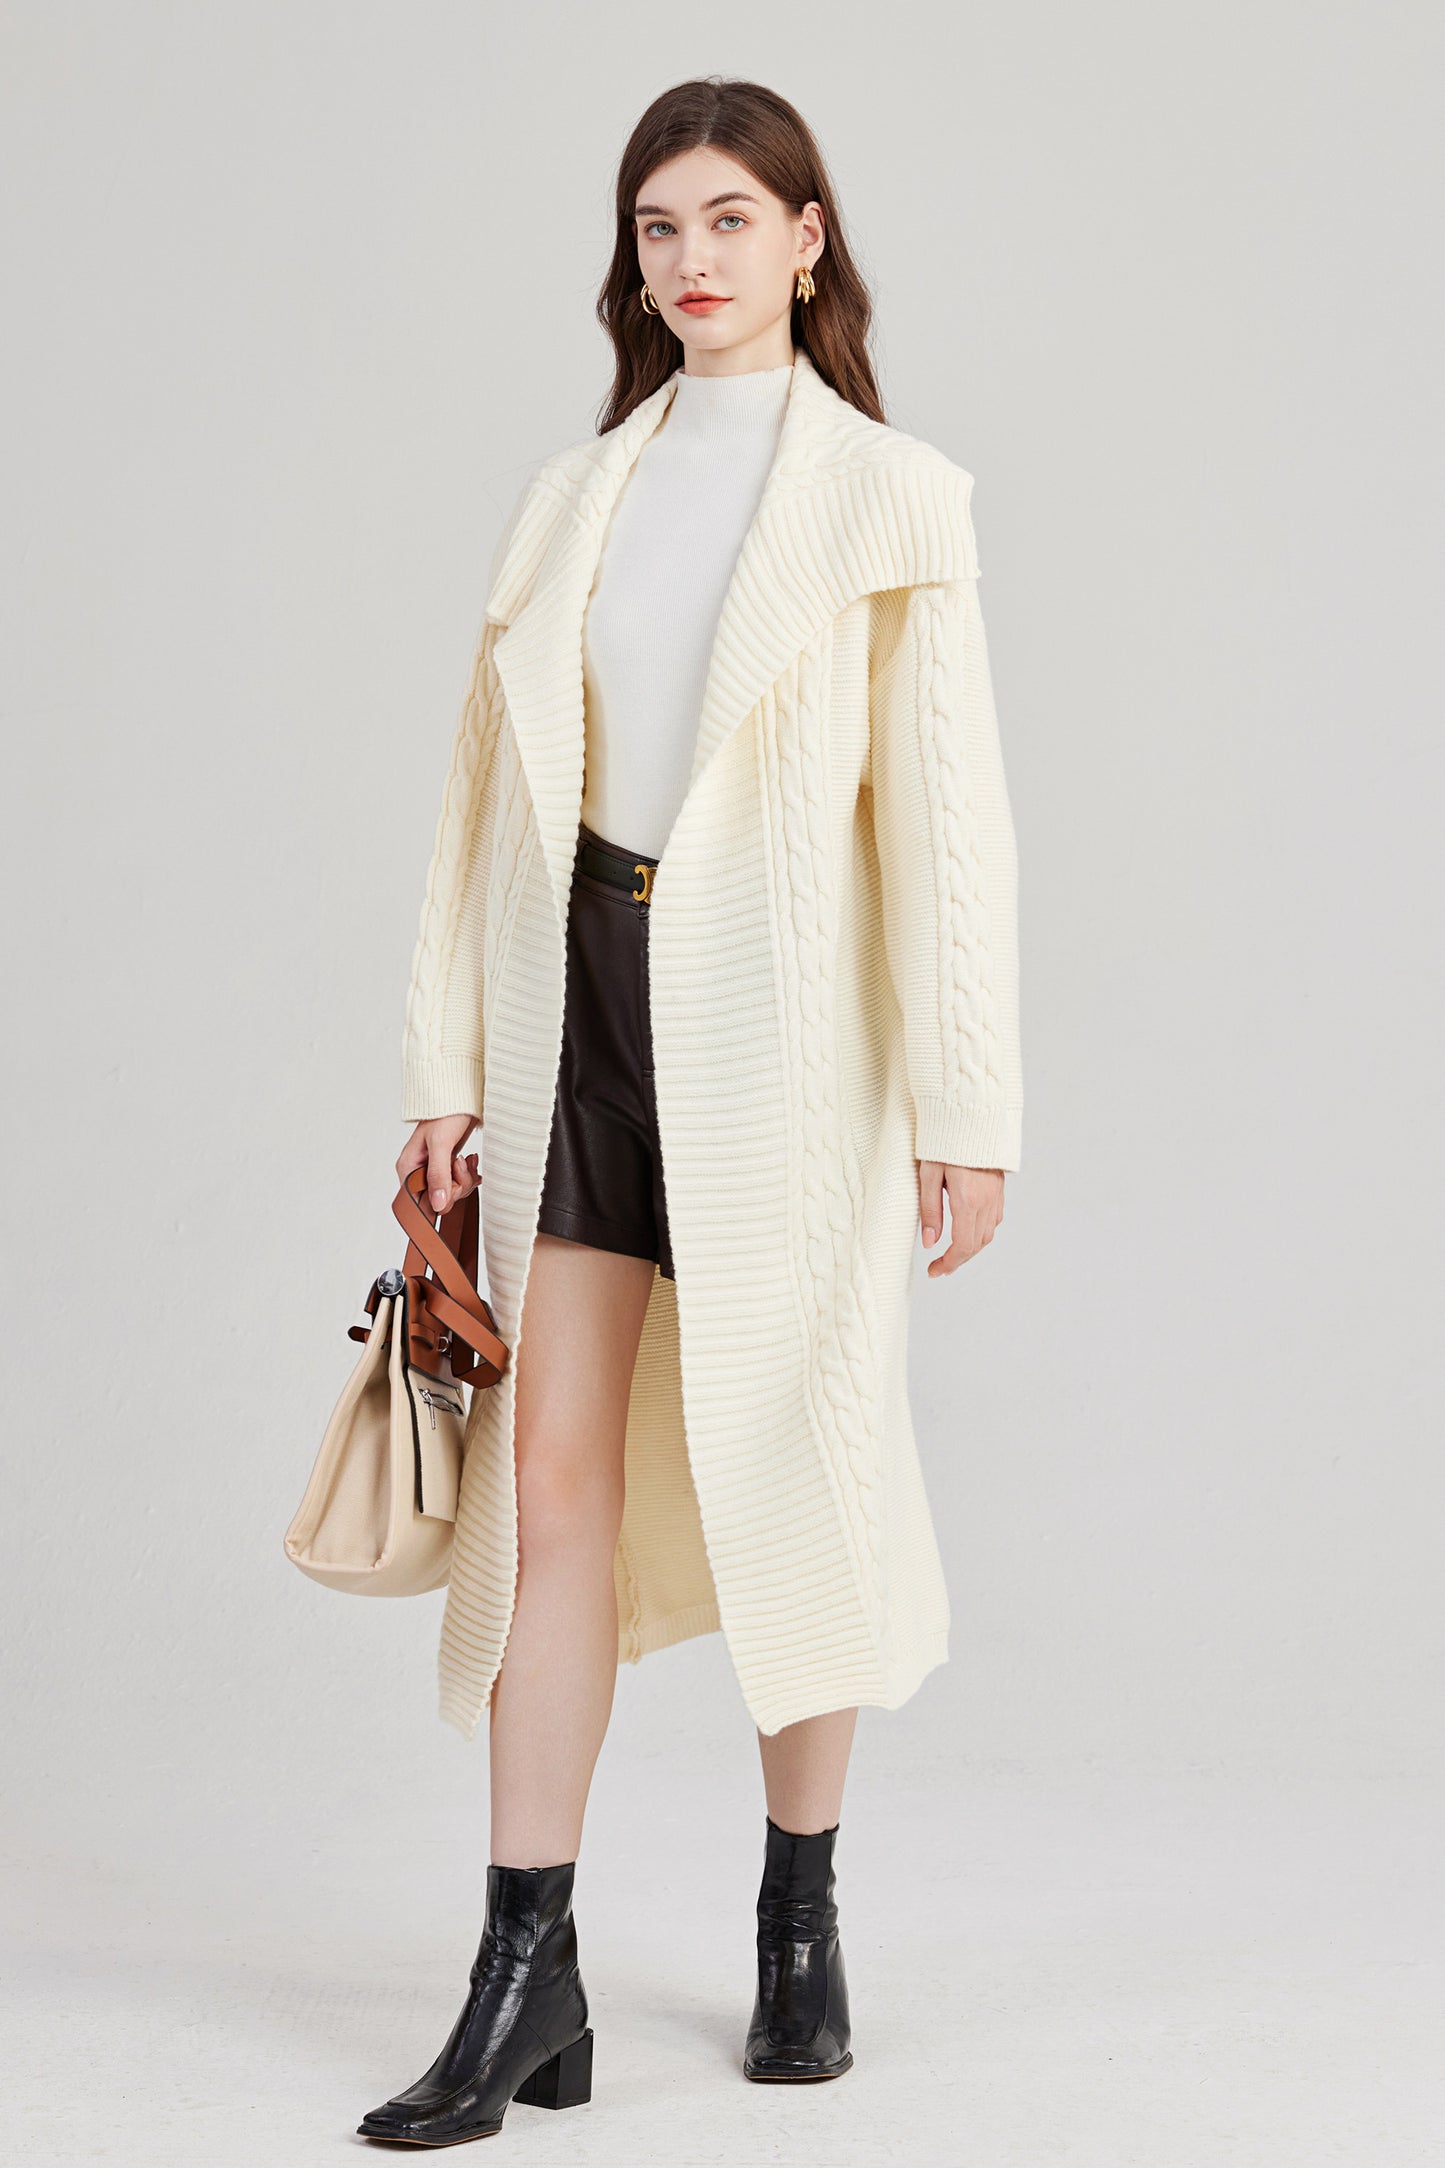 Women's Knit Cardigan Long Sleeve Lapel Casual Solid Classy Sweater Jacket Coat